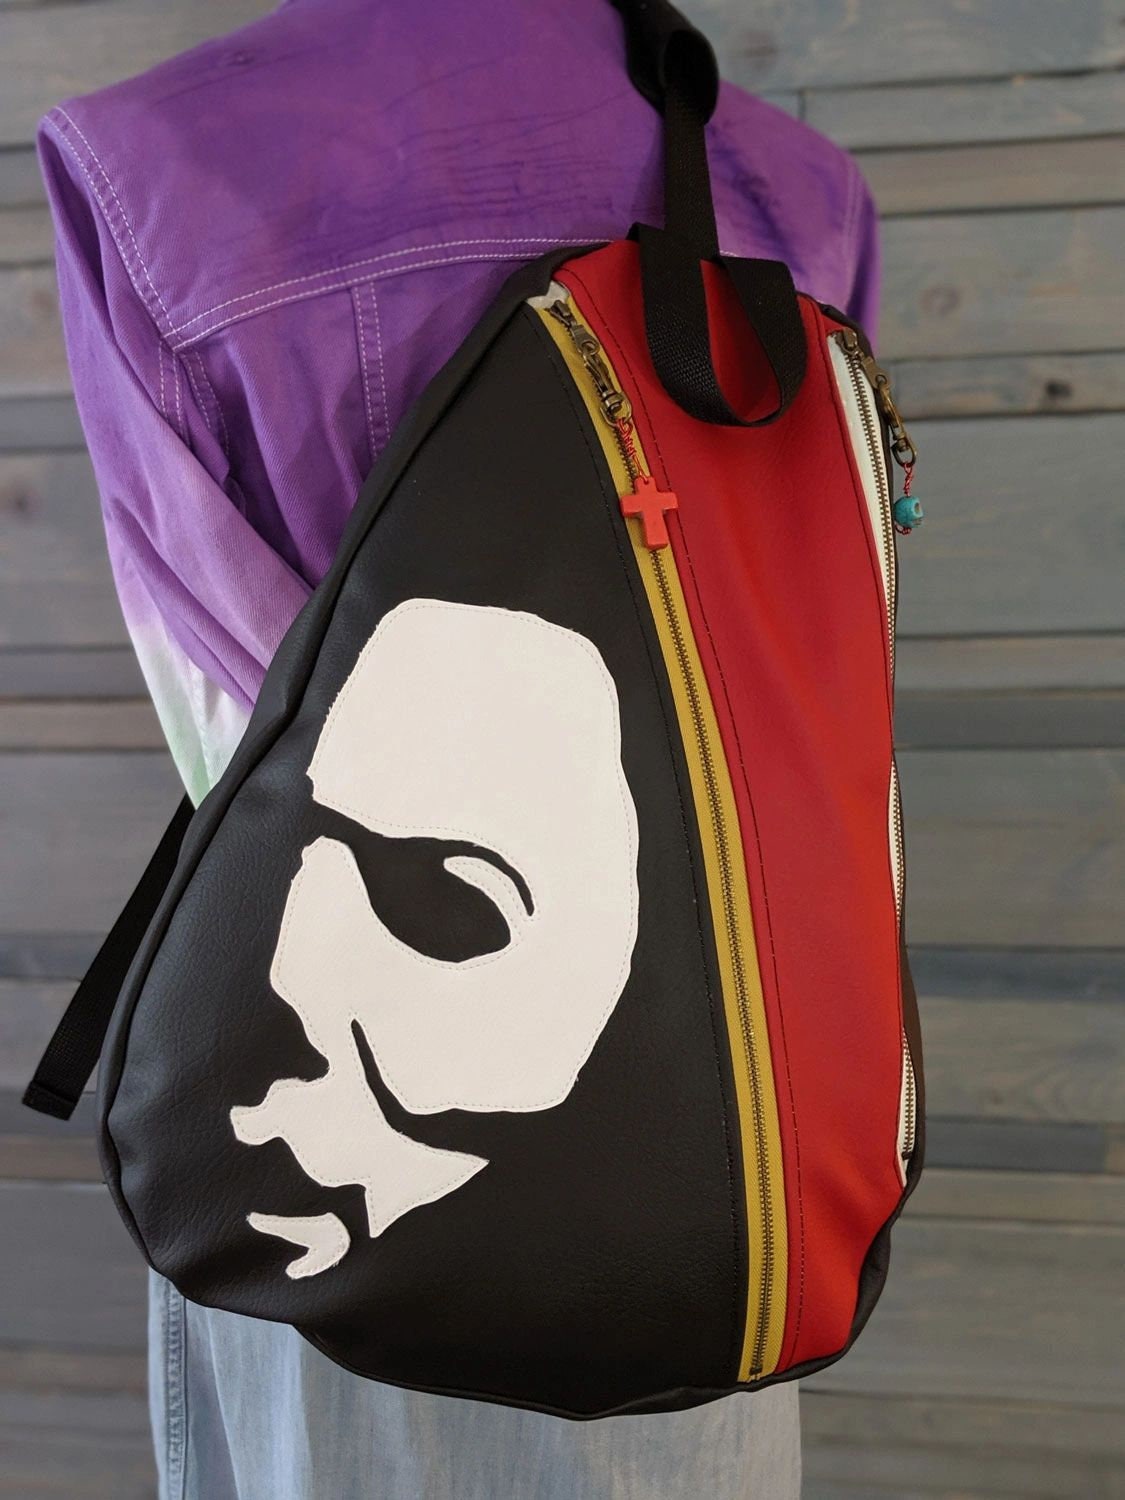 Halloween Michael Myers Its 31st October Waterproof Leather Folded Messenger Nylon Bag Travel Tote Hopping Folding School Handbags 